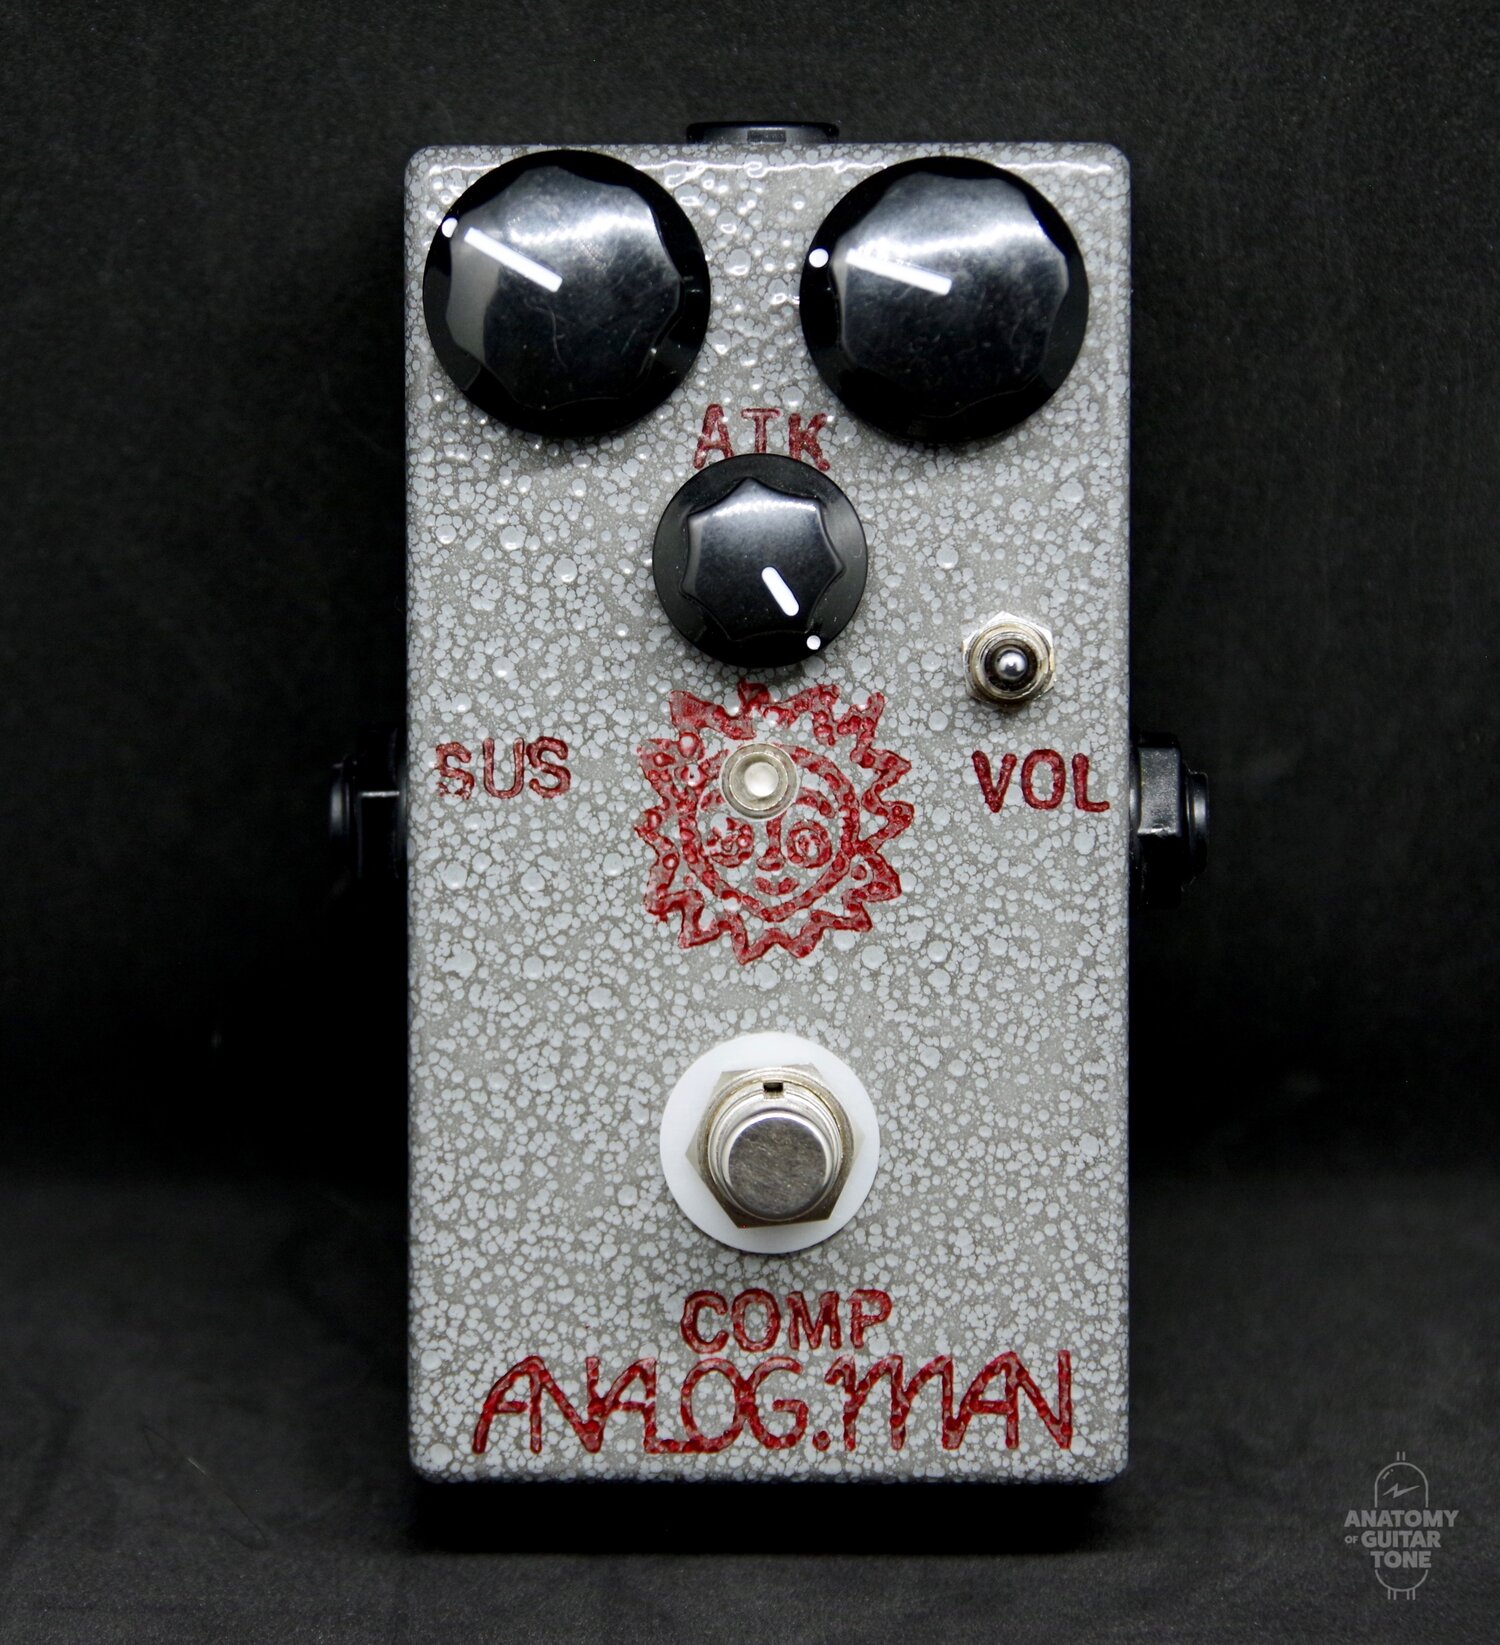 Analog Man CompROSSor pedal with RYCK mod — Anatomy of Guitar Tone